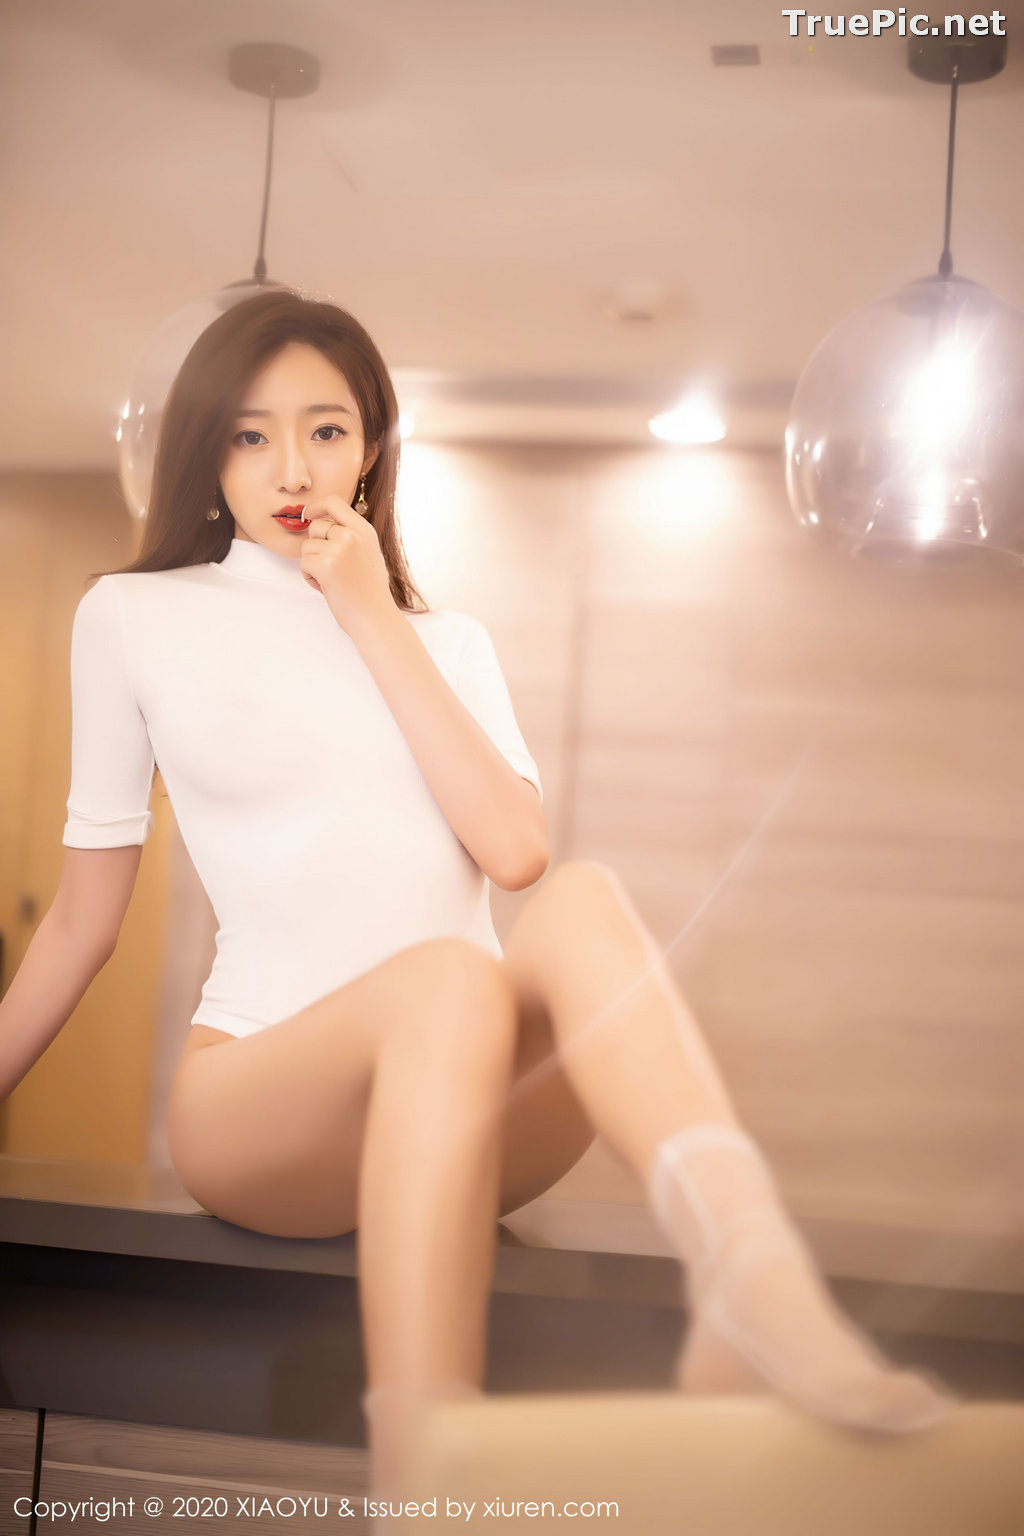 Image XiaoYu Vol.389 - Chinese Model - 安琪 Yee - Beautiful In White - TruePic.net - Picture-20